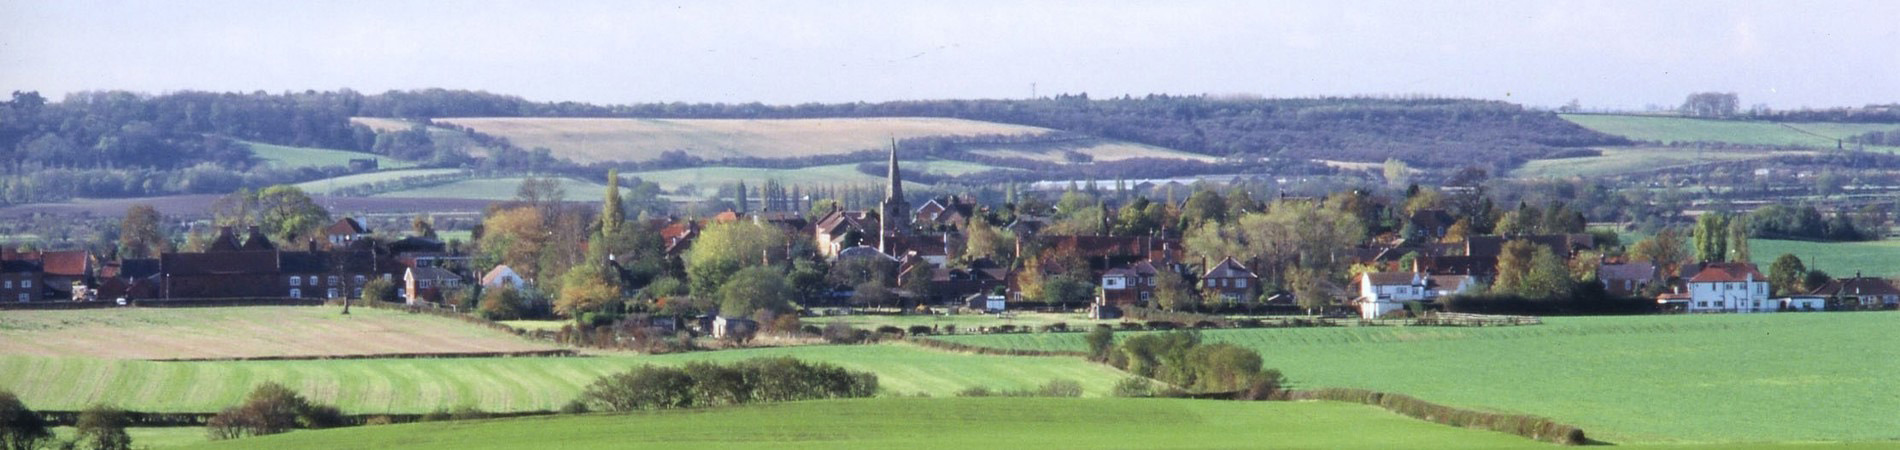 The village of Bradmore